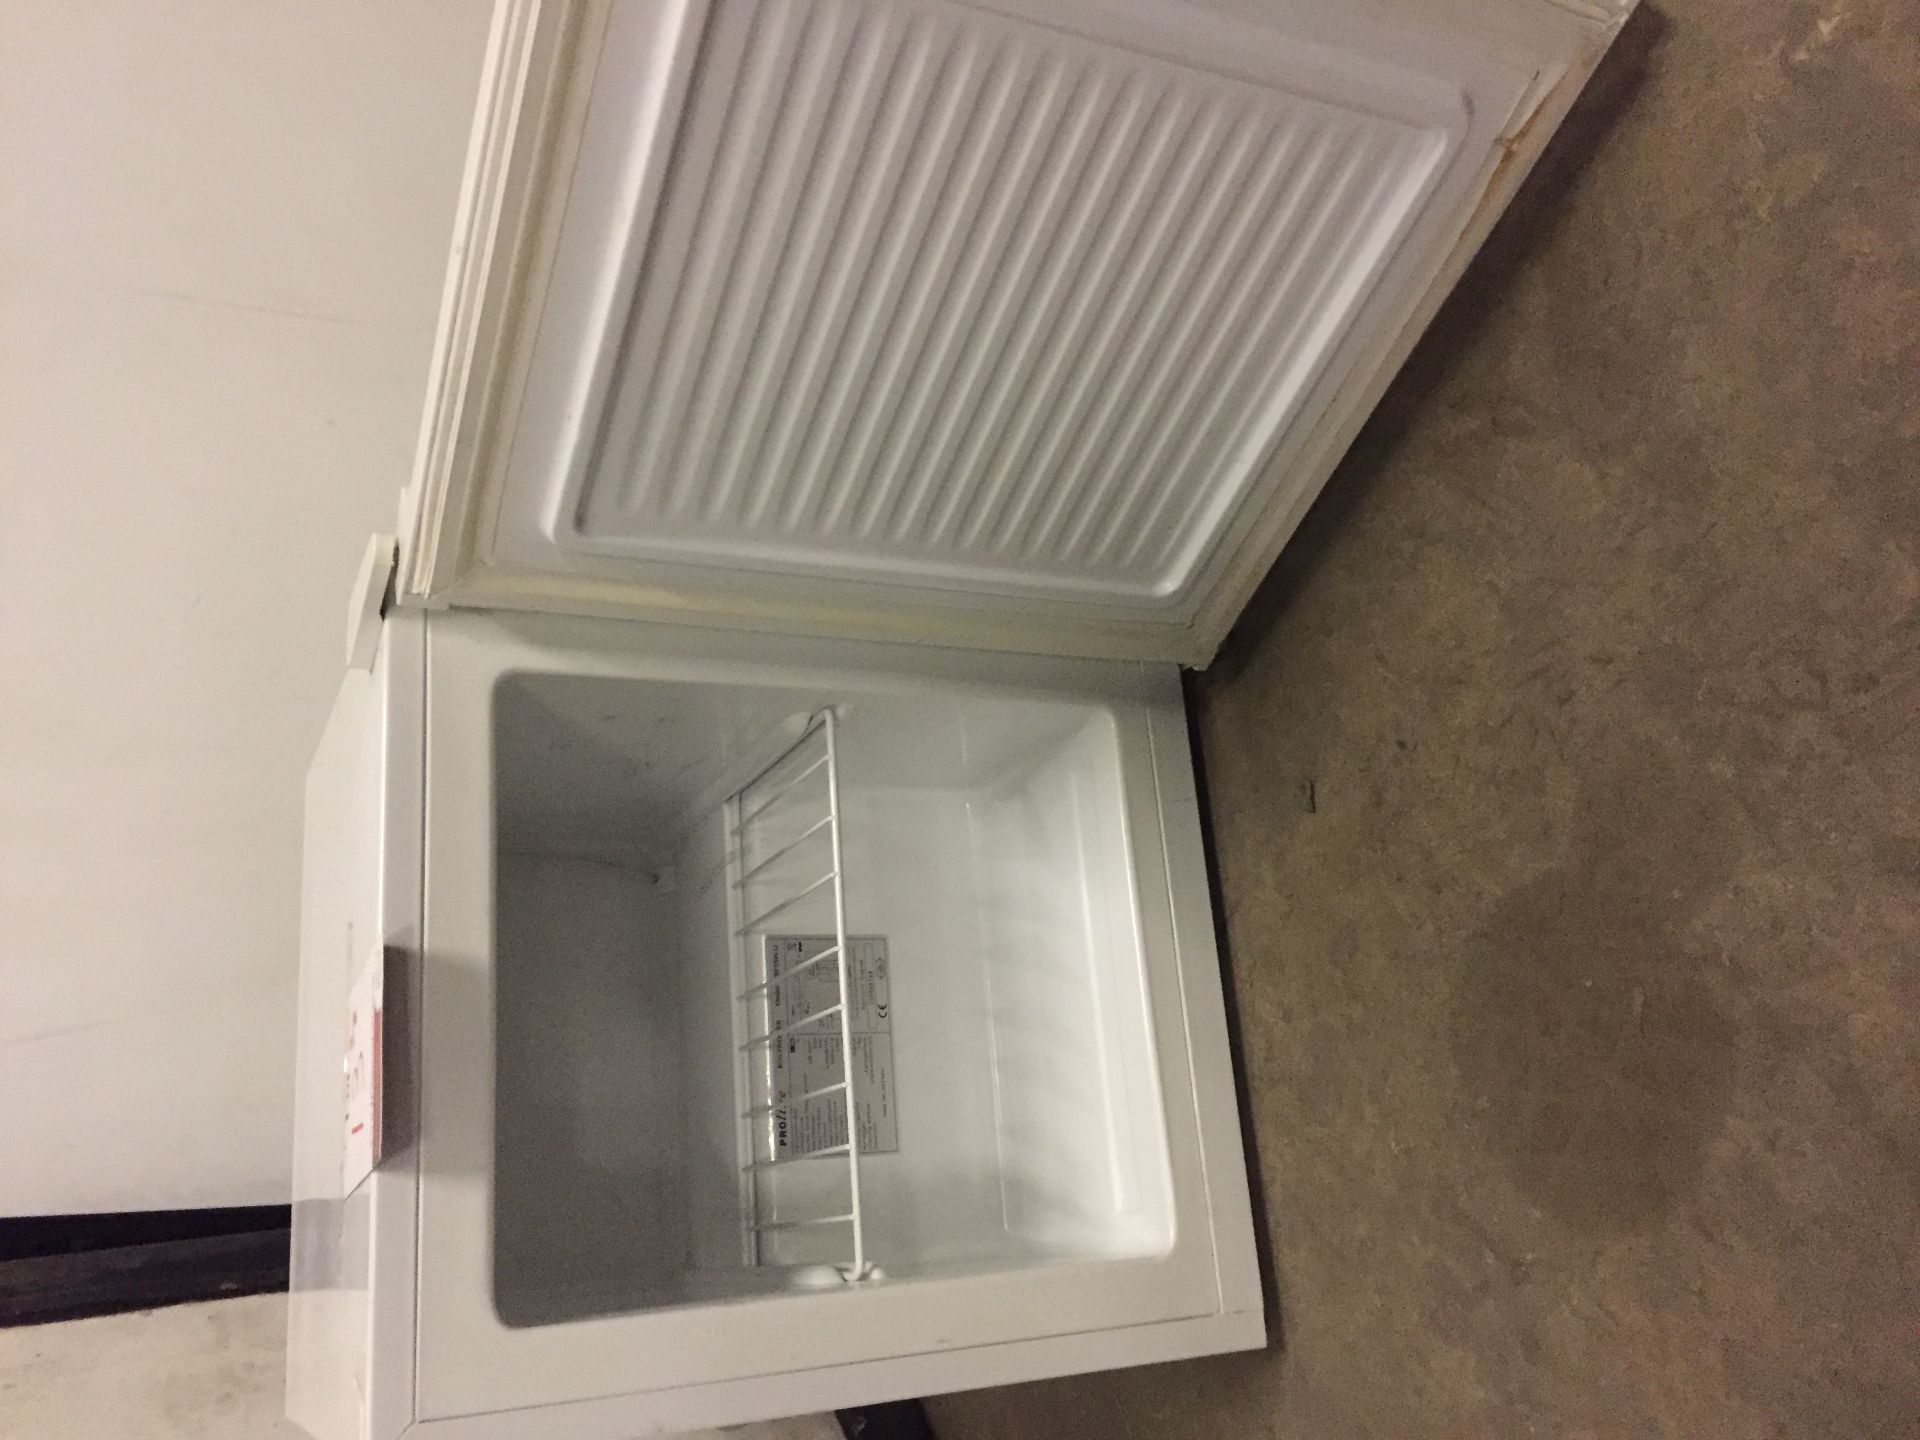 Russel Hobbs Refrigerator | Pro line Freezer - Image 2 of 4